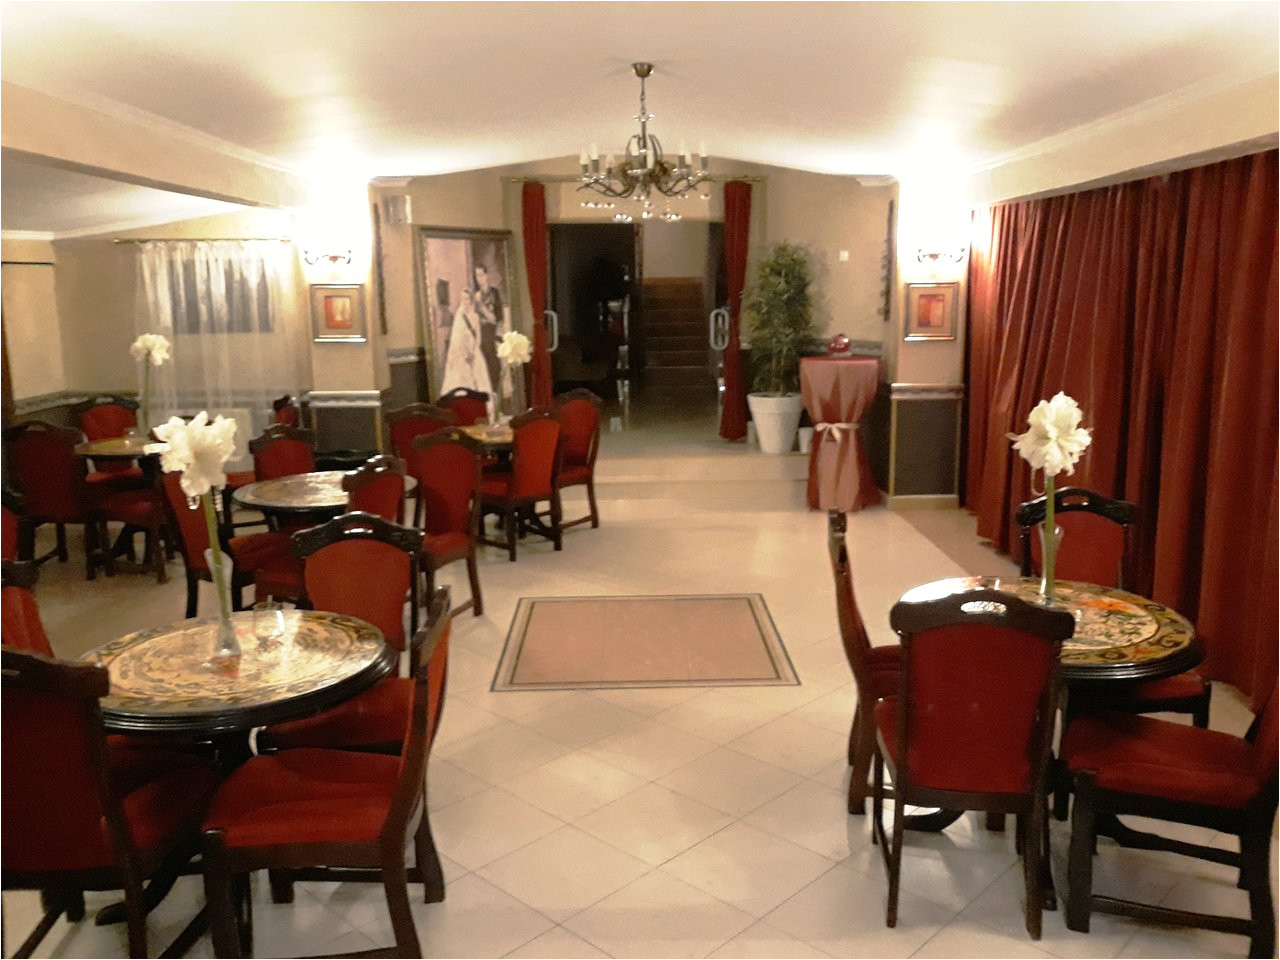 Used Furniture Stores In Hanford Ca Korona Hotel 42 I 7i 9i Prices Reviews Sighisoara Romania